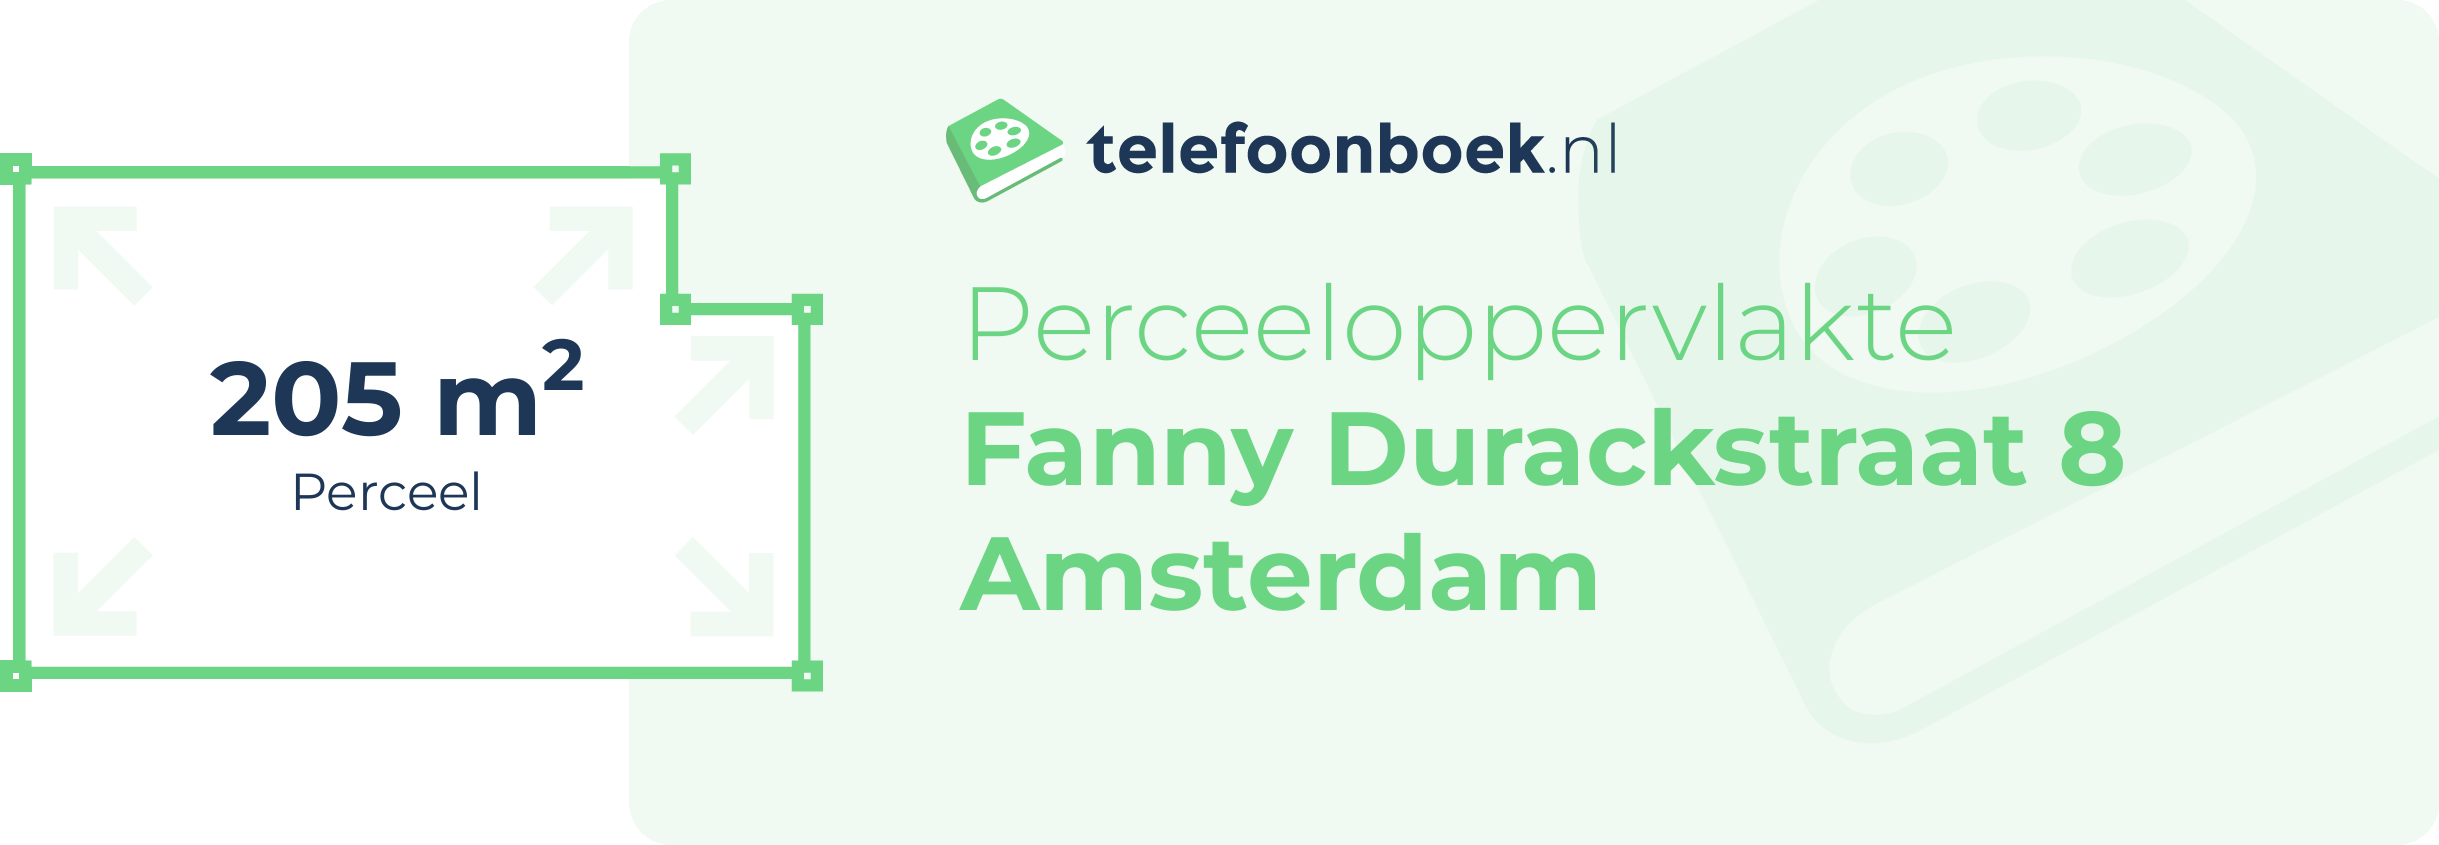 Perceeloppervlakte Fanny Durackstraat 8 Amsterdam